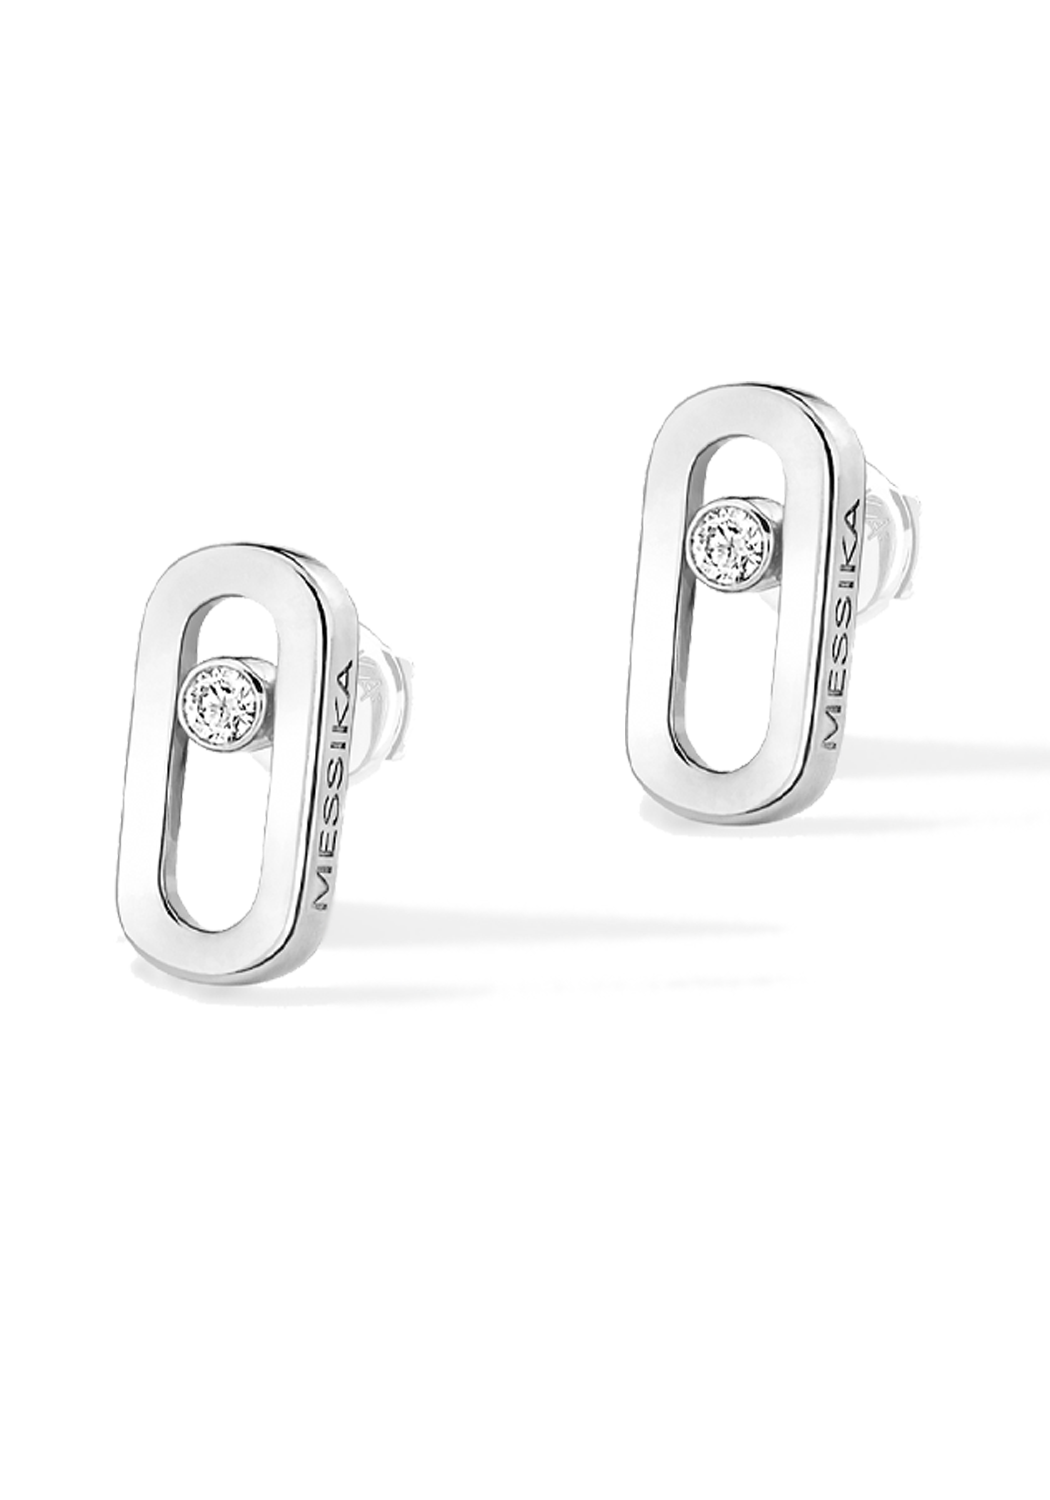 Messika Move Uno 18K White Gold Diamond Stud Earrings | Ref. 12305-WG | OsterJewelers.com